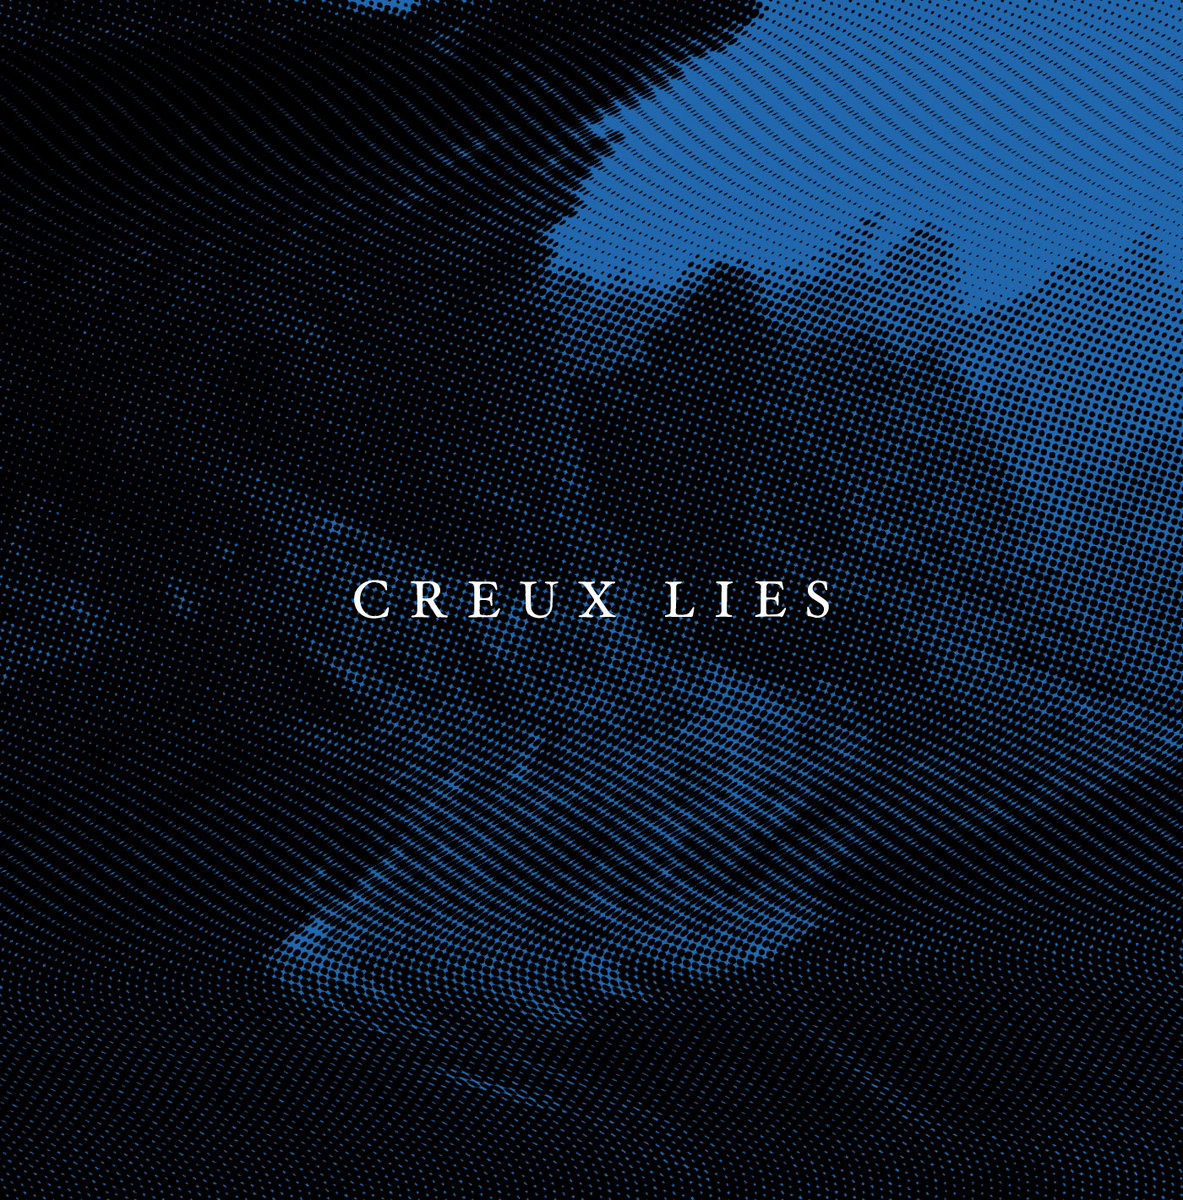 Creux Lies cover